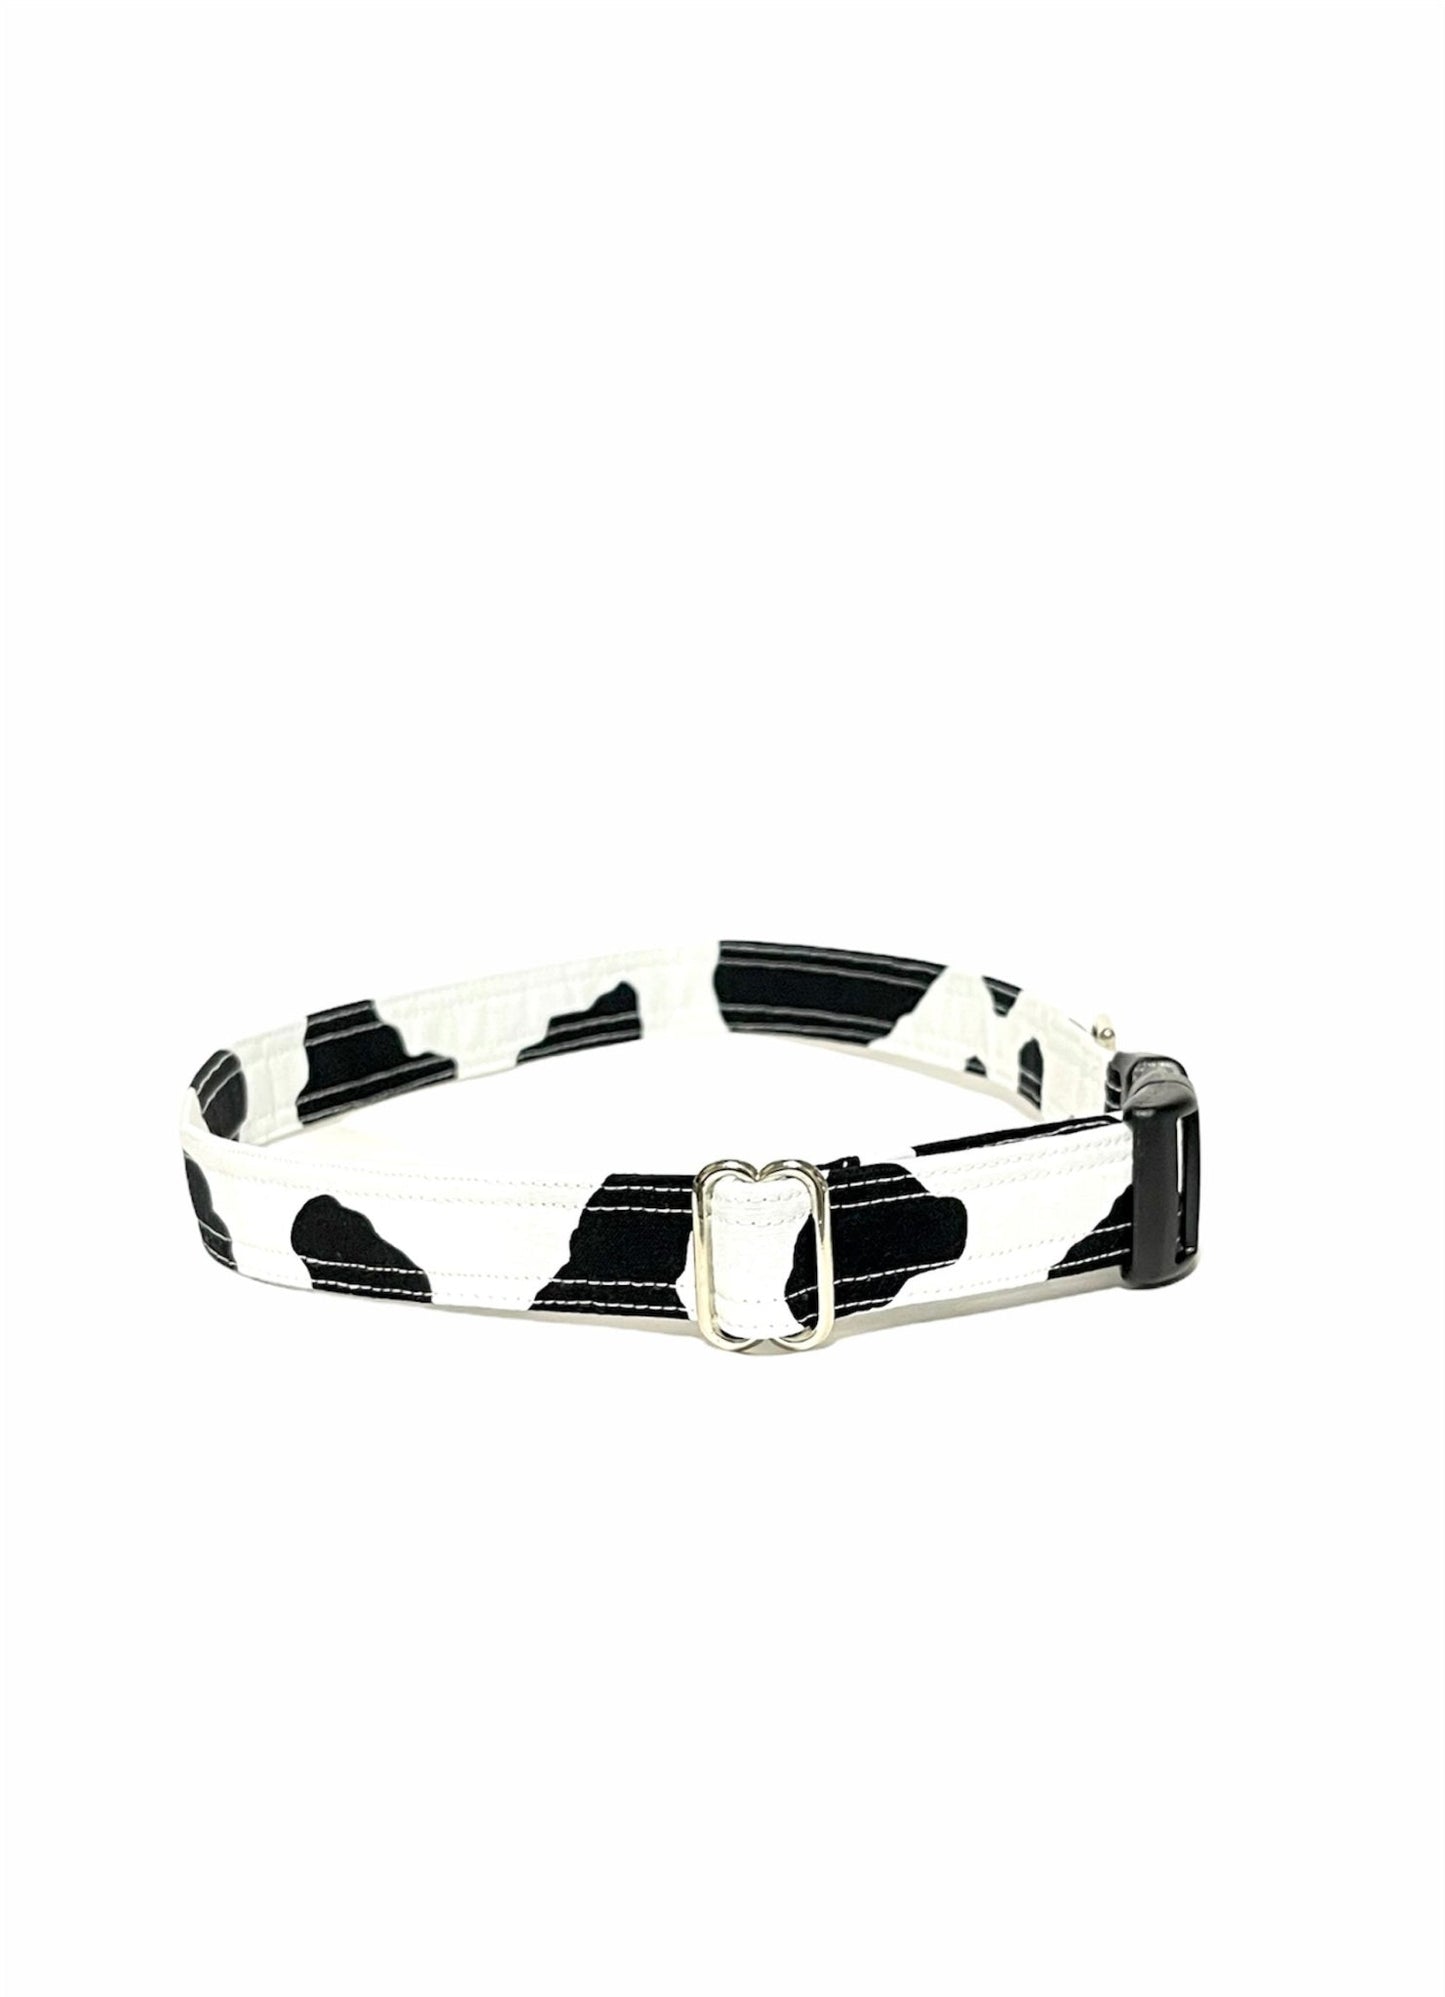 Cow Print Dog Collar - Fabric Style - muttsnbones